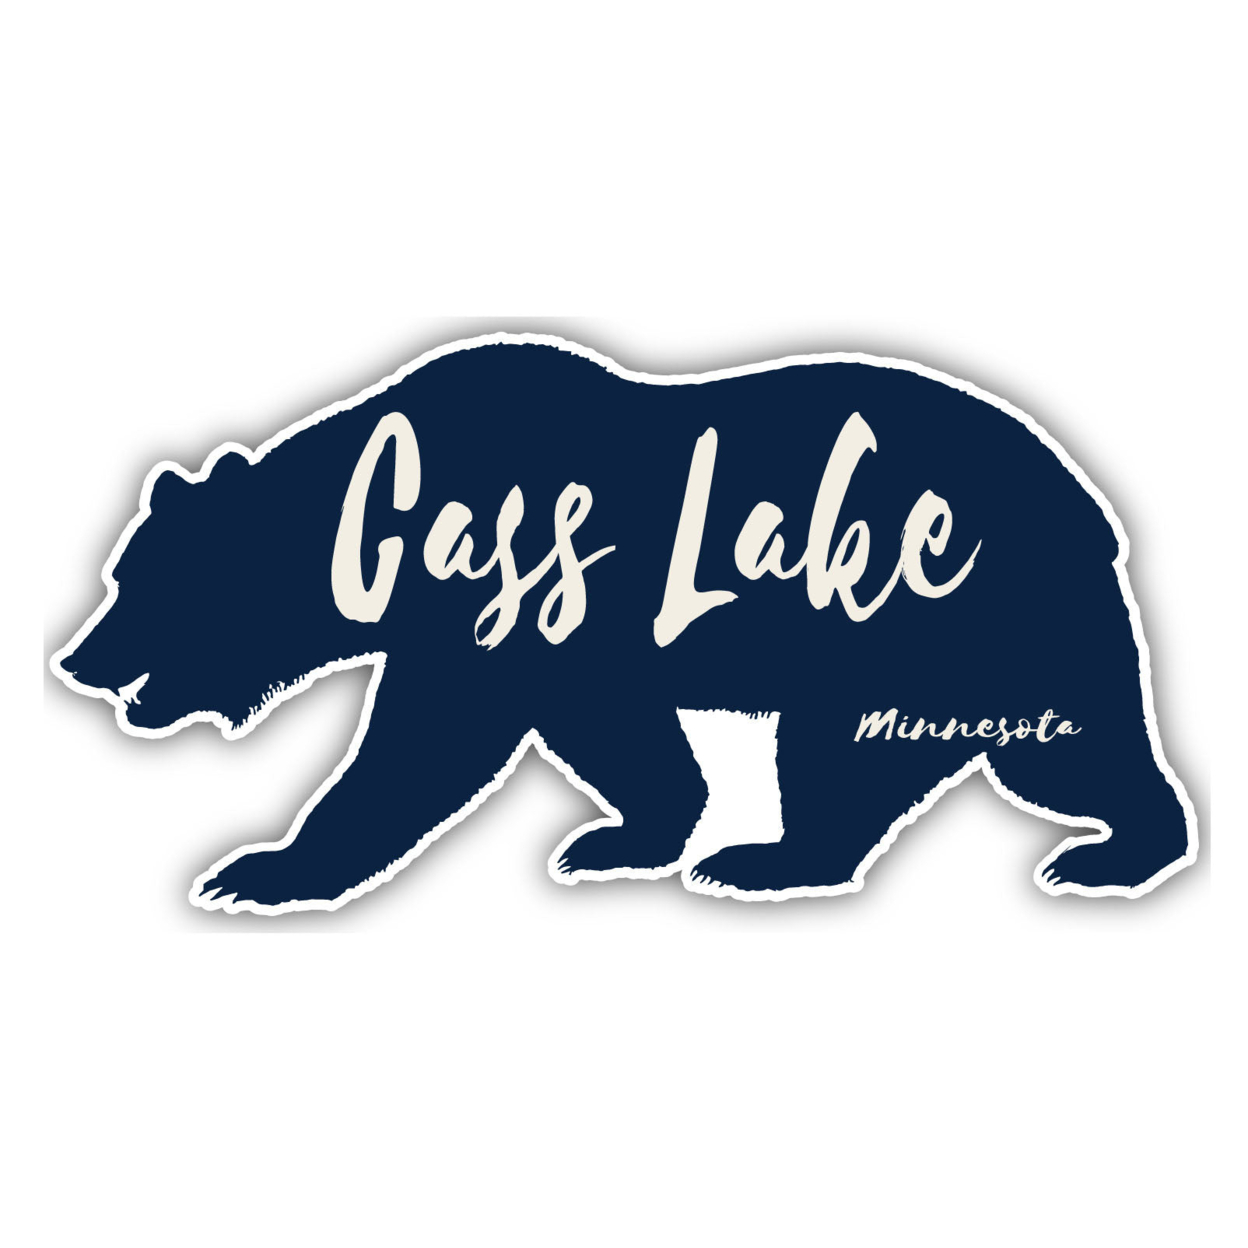 Cass Lake Minnesota Souvenir Decorative Stickers (Choose Theme And Size) - Single Unit, 12-Inch, Bear